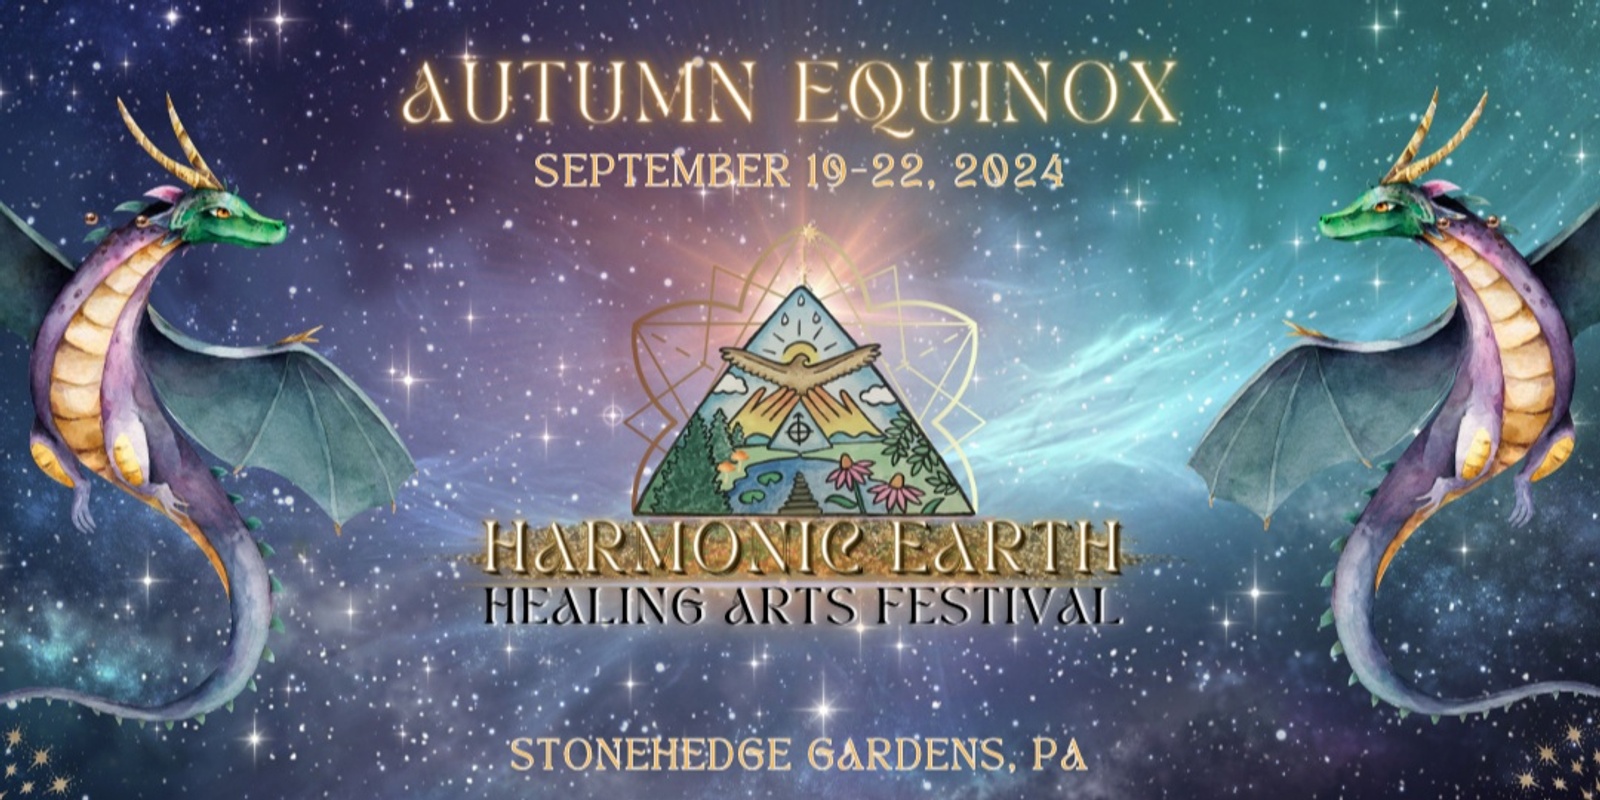 Banner image for Harmonic Earth Festival 2024, Stonehedge Gardens, PA